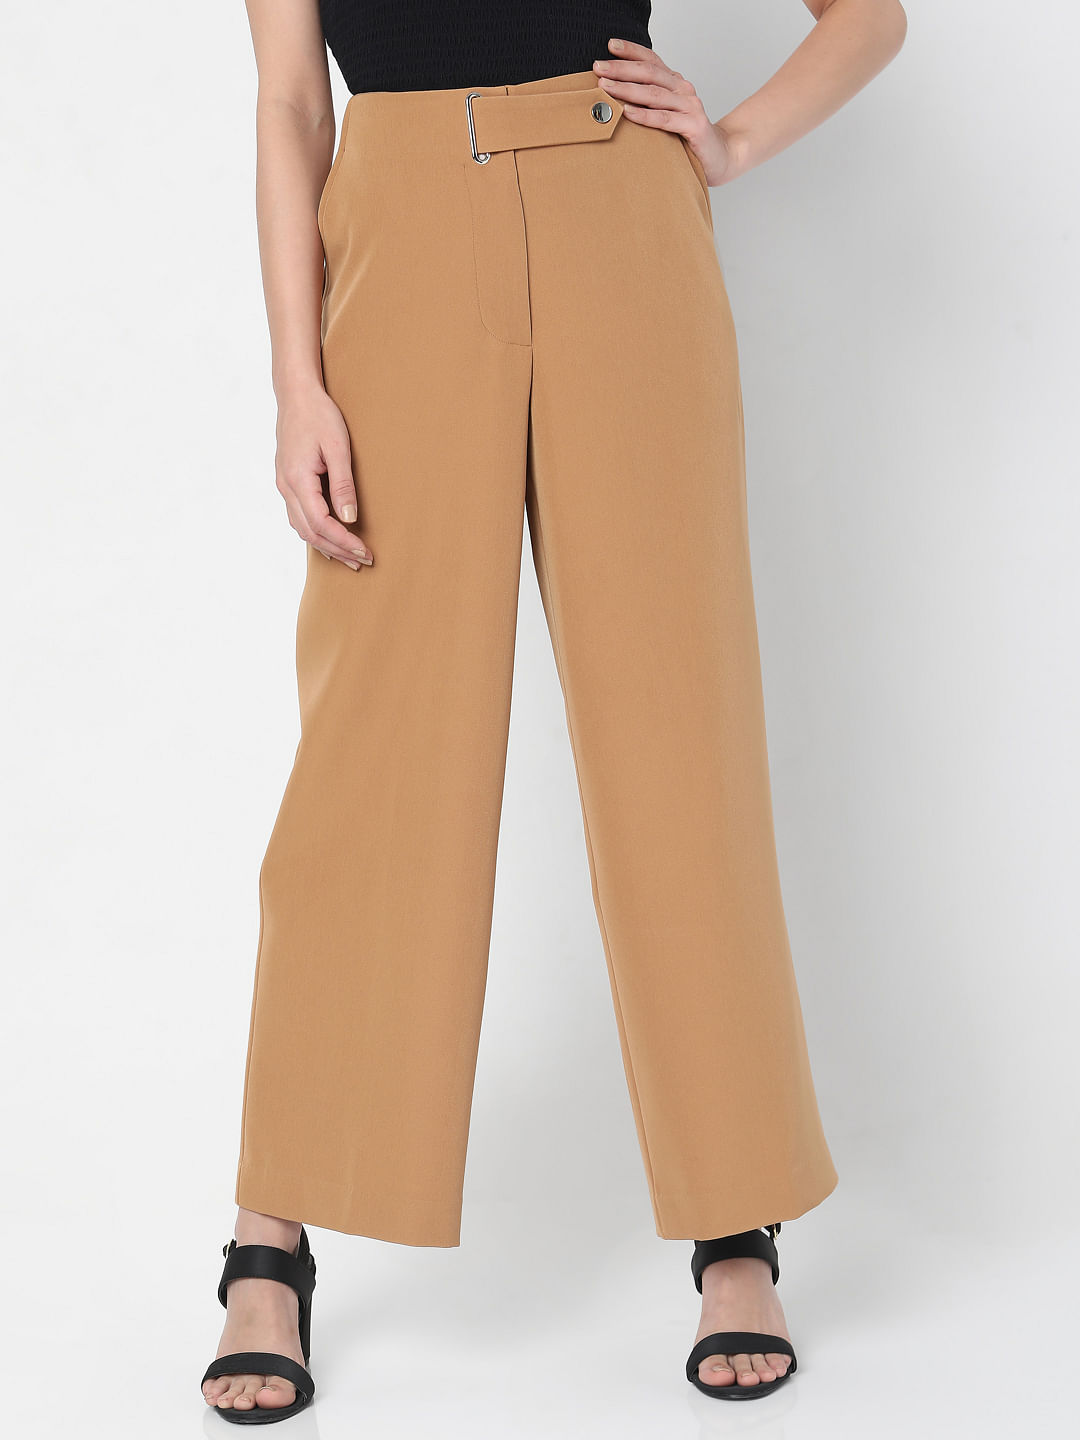 Buy Brown Trousers  Pants for Women by Encrustd Online  Ajiocom